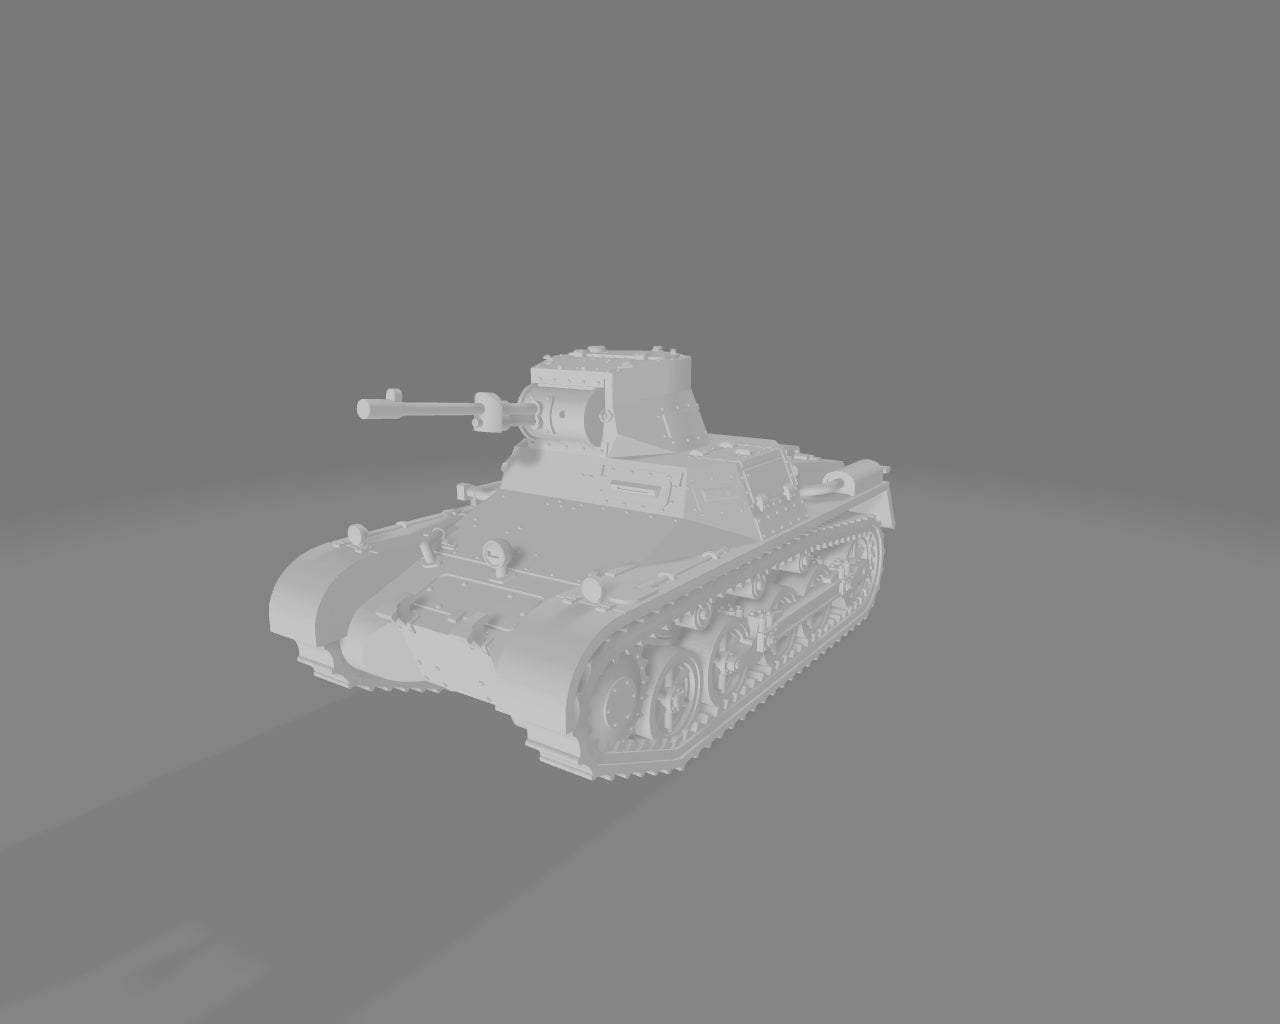 Spanish Panzer I 'Breda'